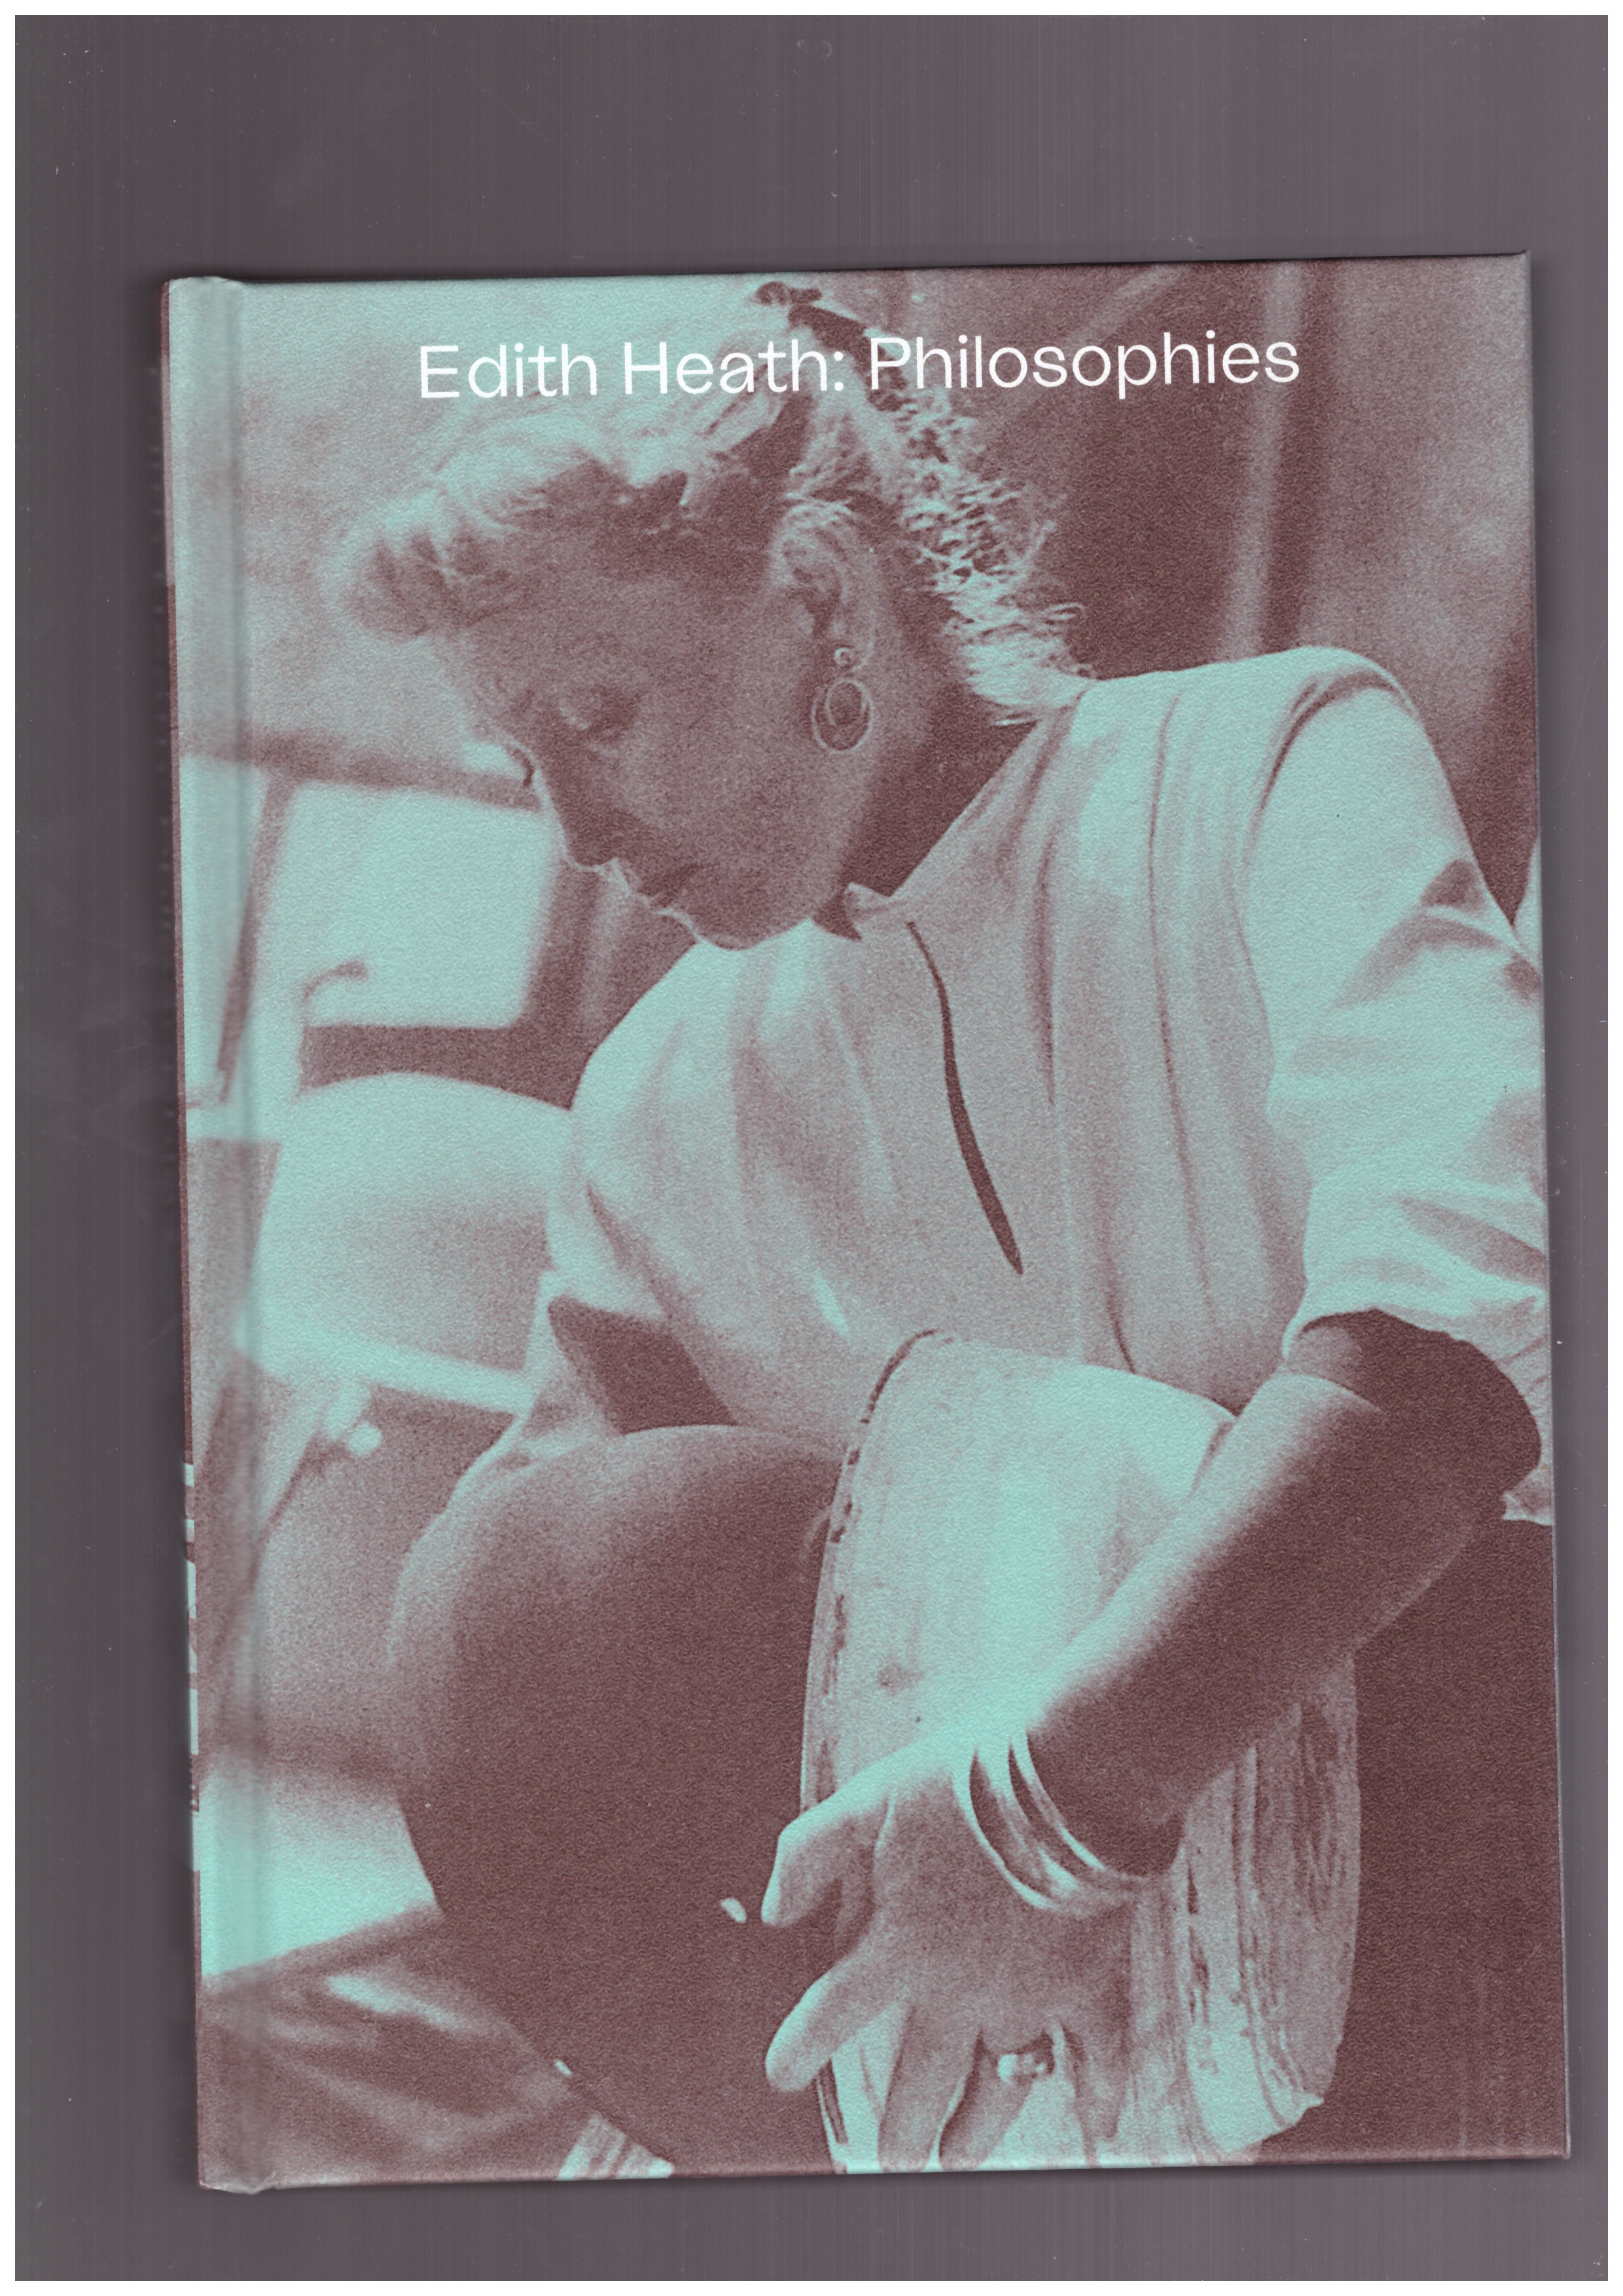 VOLLAND, Jennifer M. ; MARINO, Chris (eds.) - Edith Heath: Philosophies